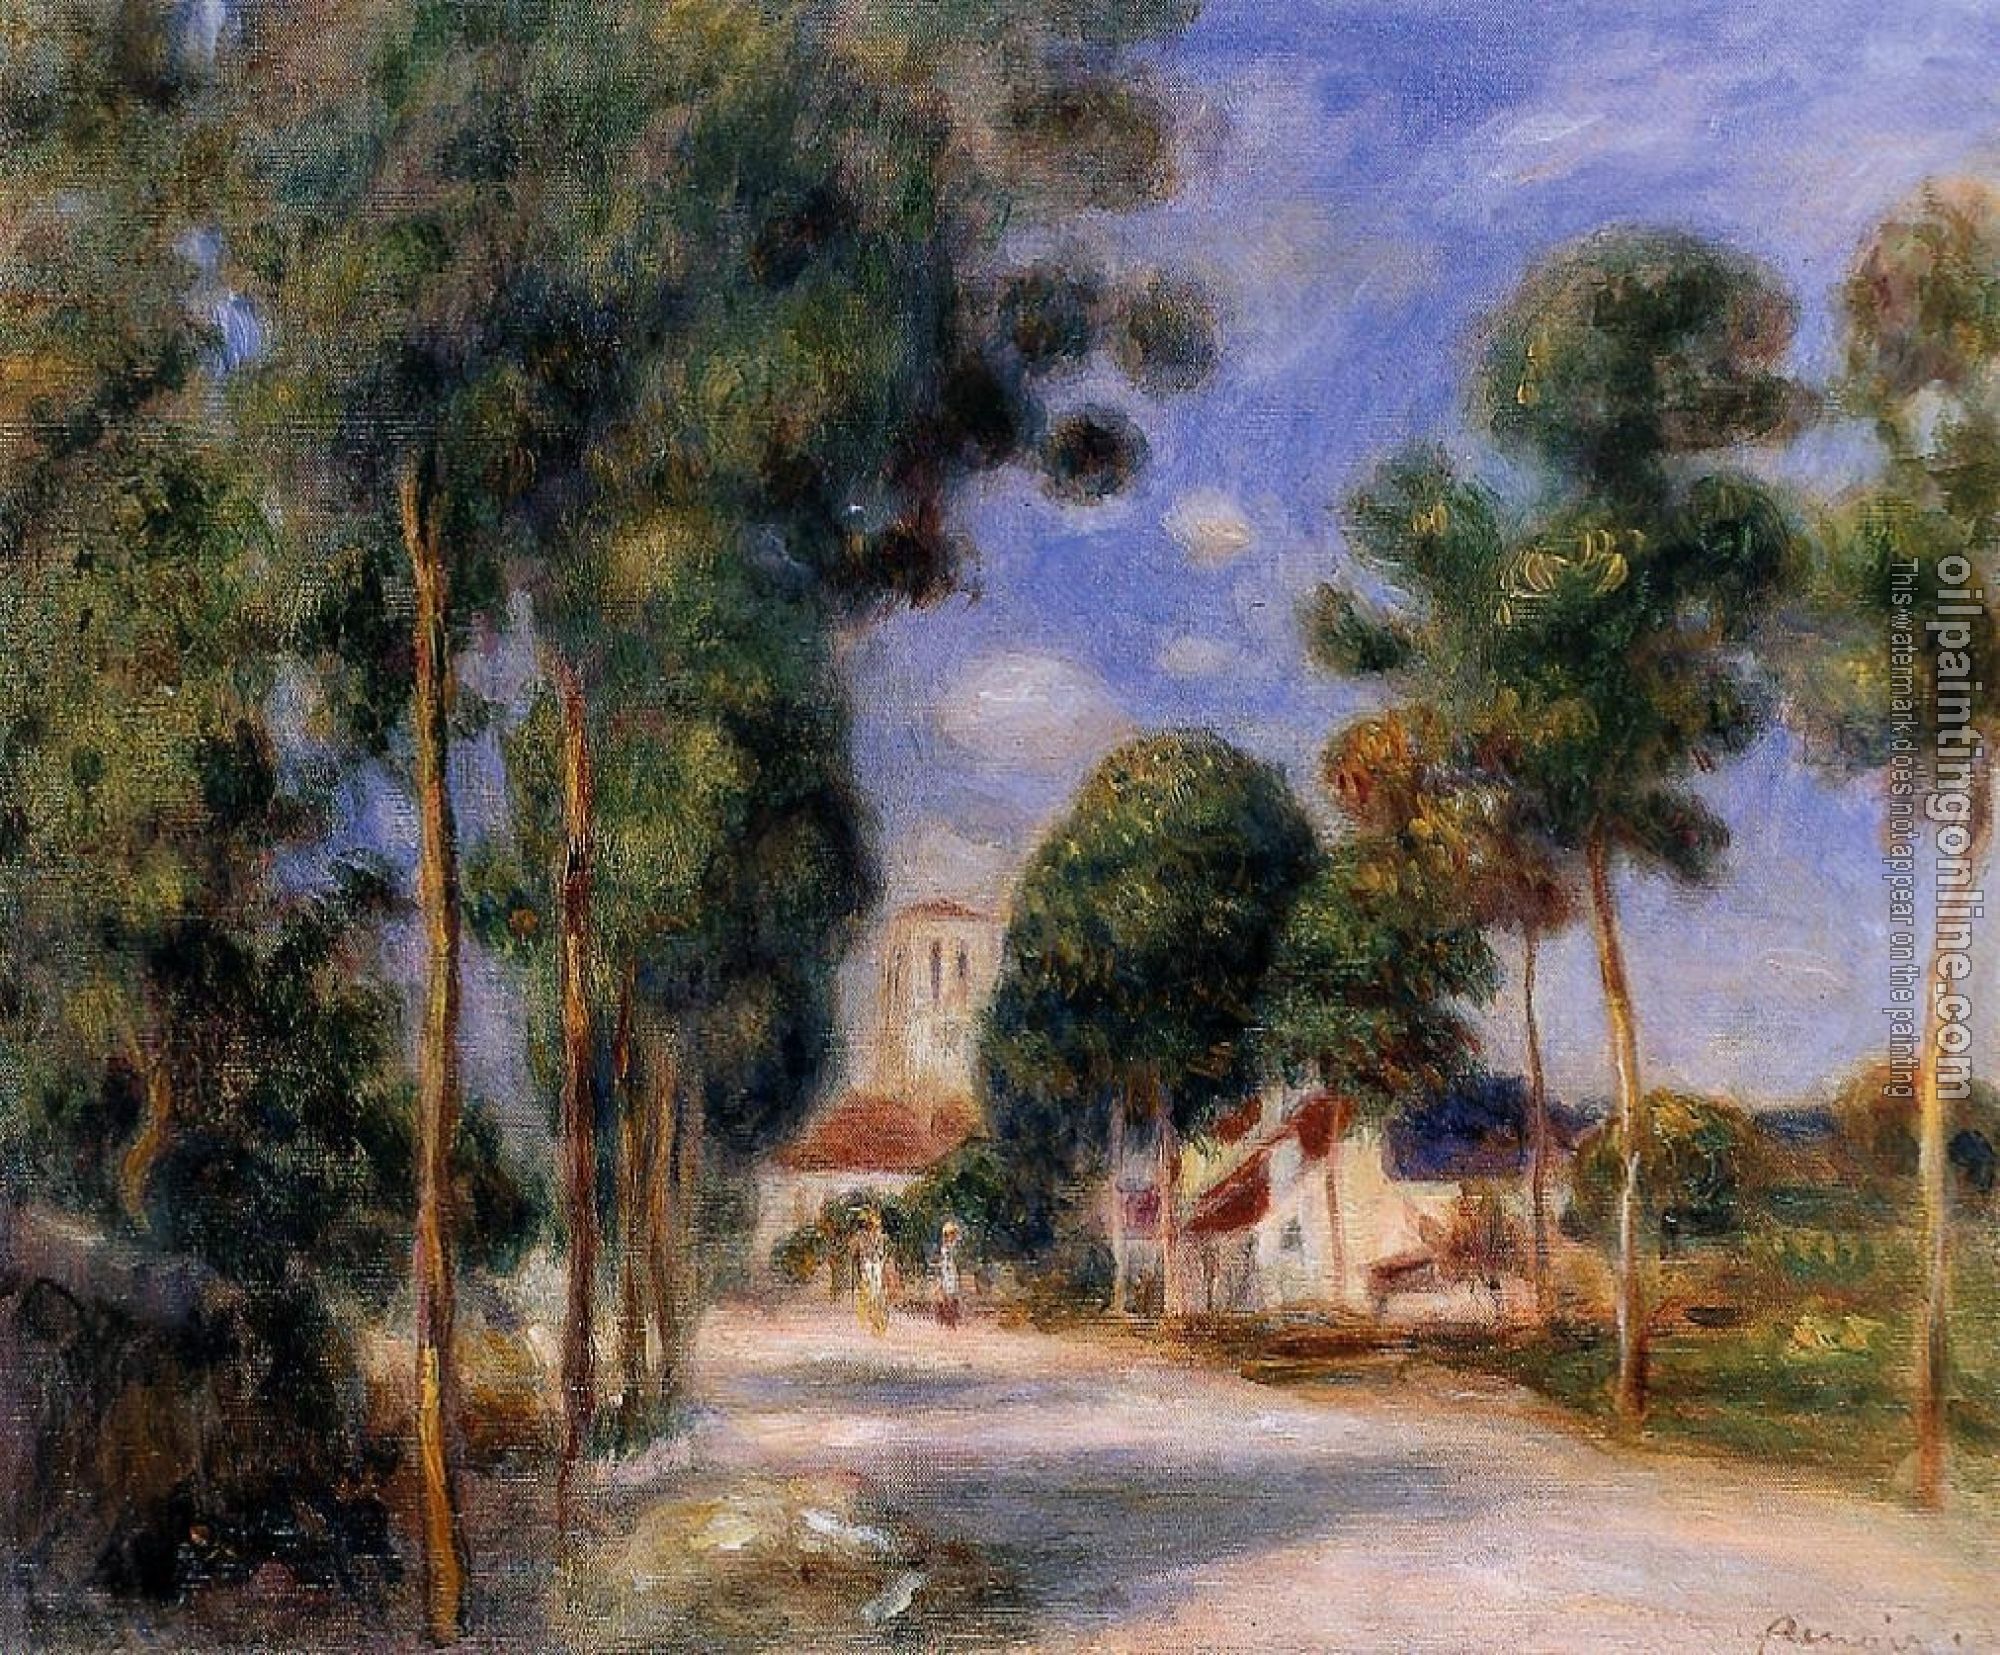 Renoir, Pierre Auguste - Entering the Village of Essoyes